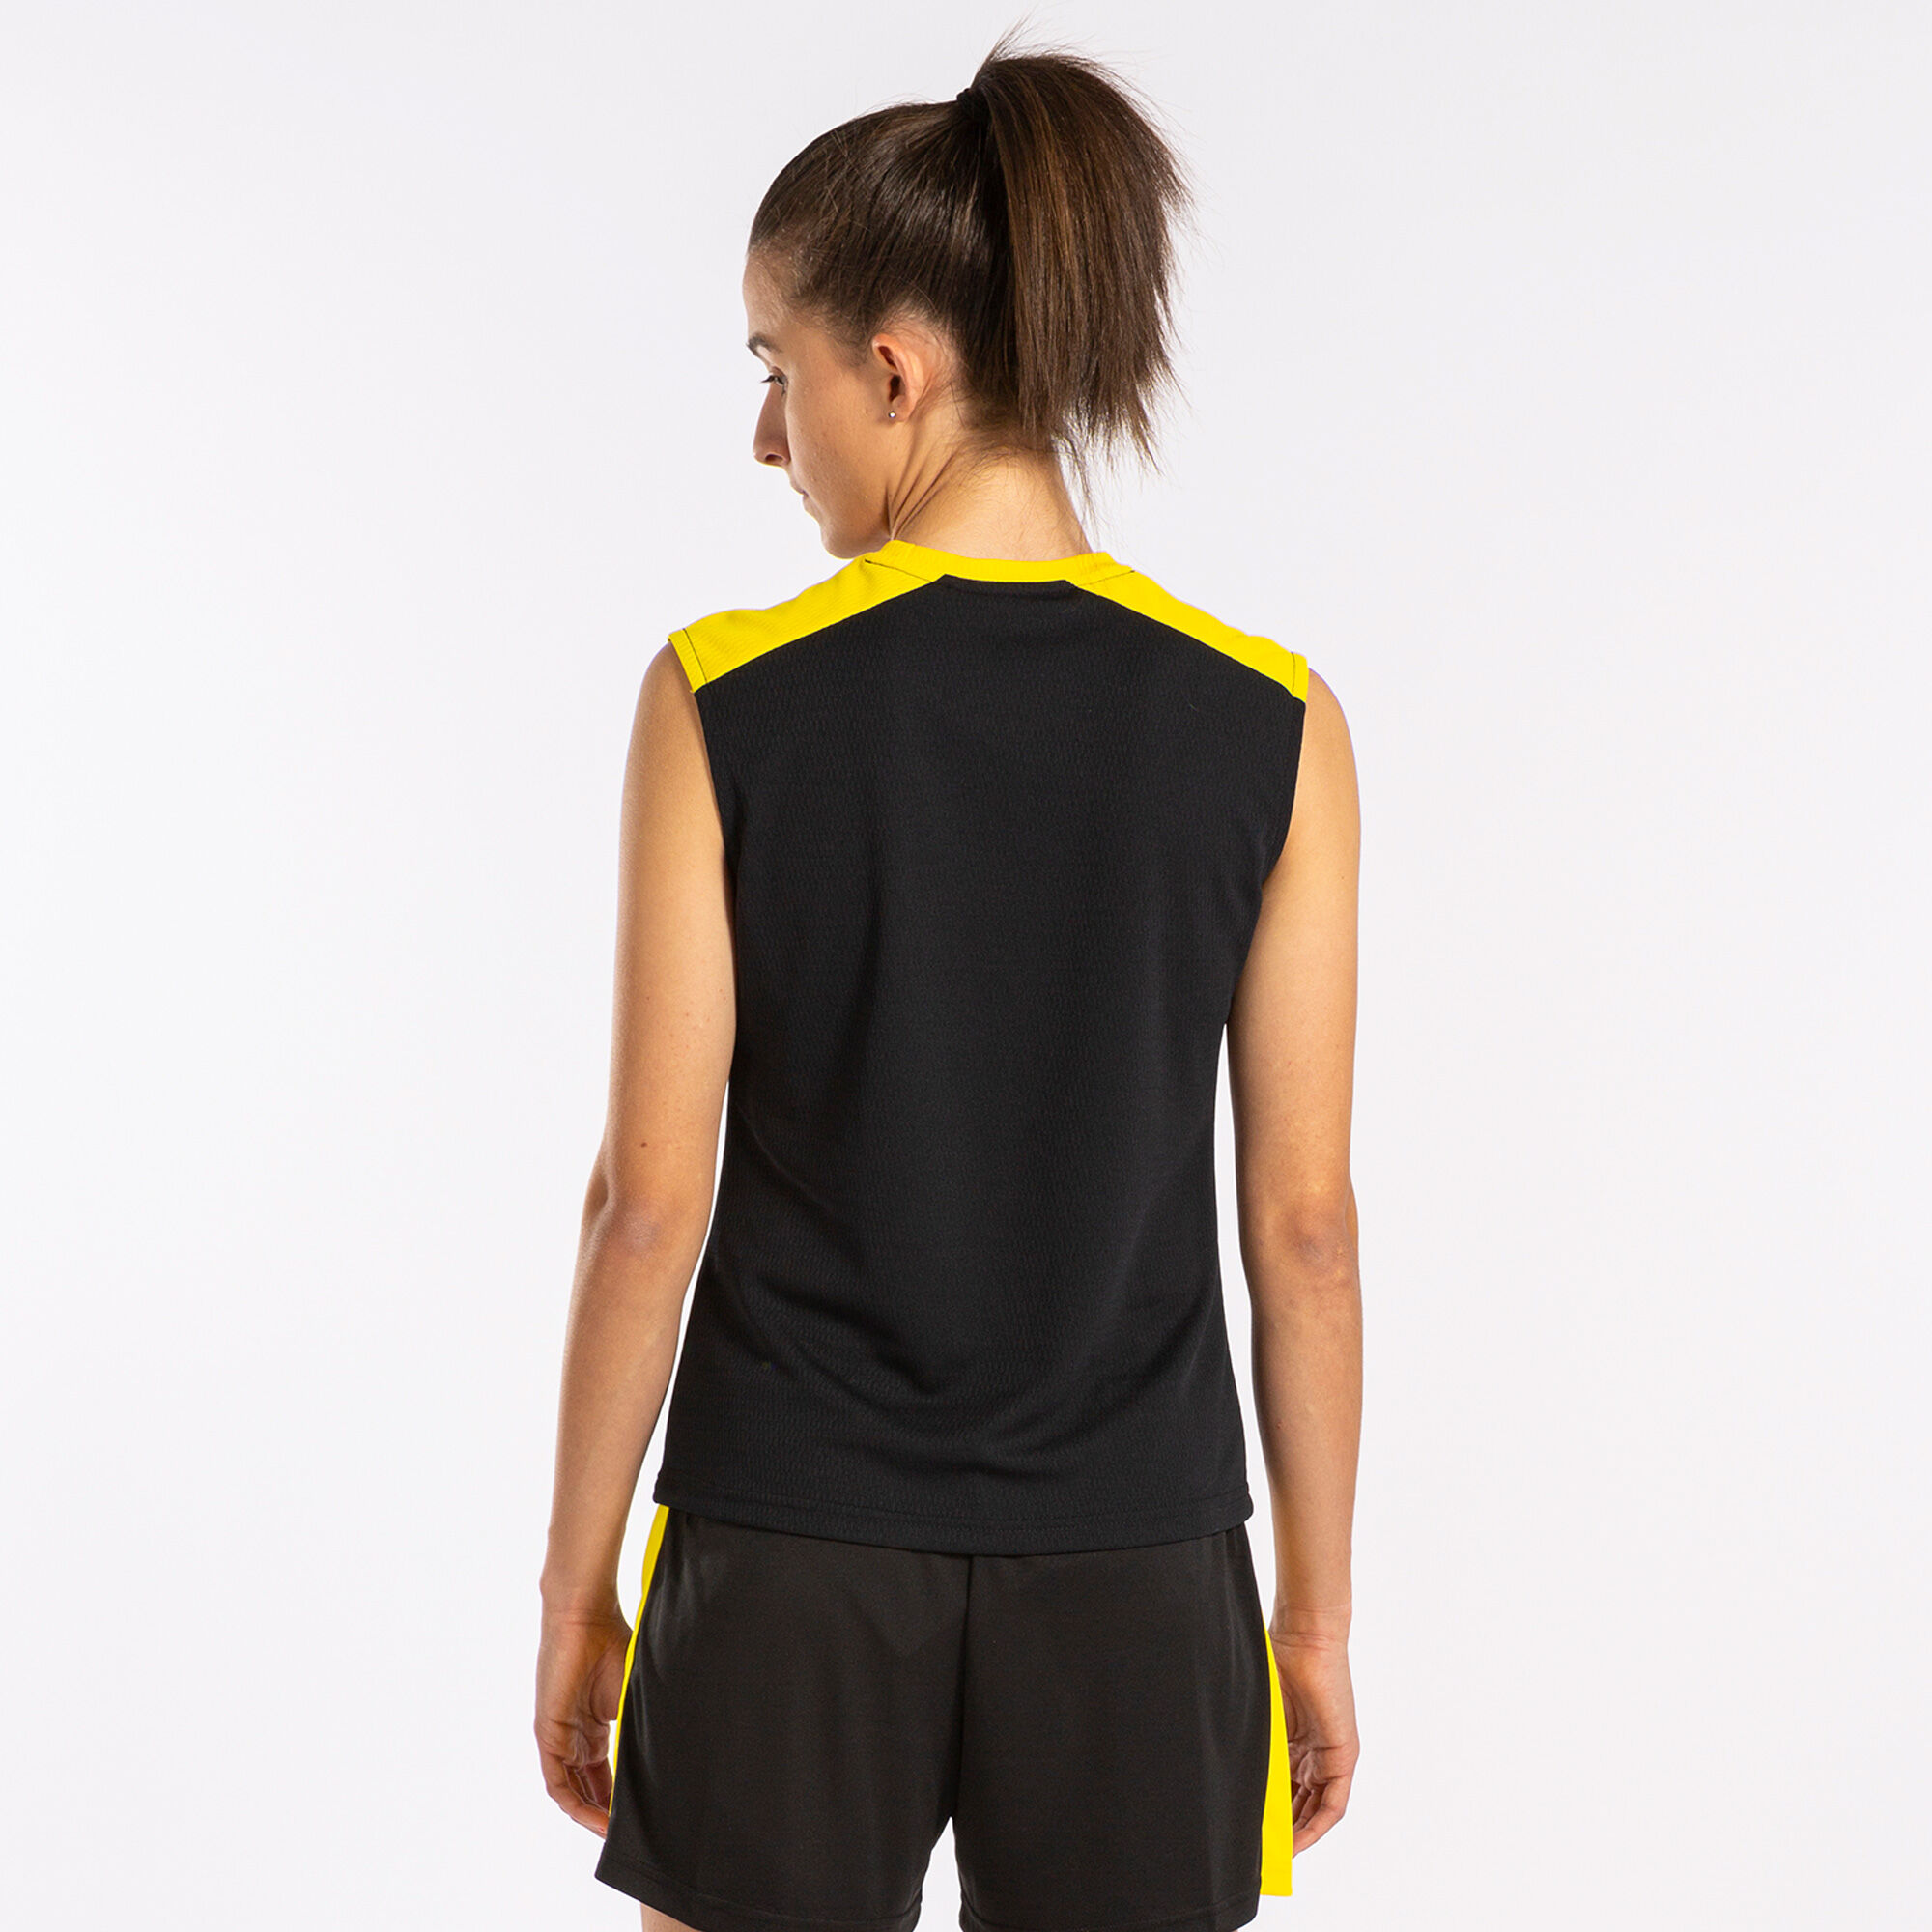 Camiseta tirantes mujer Eco Championship negro amarillo